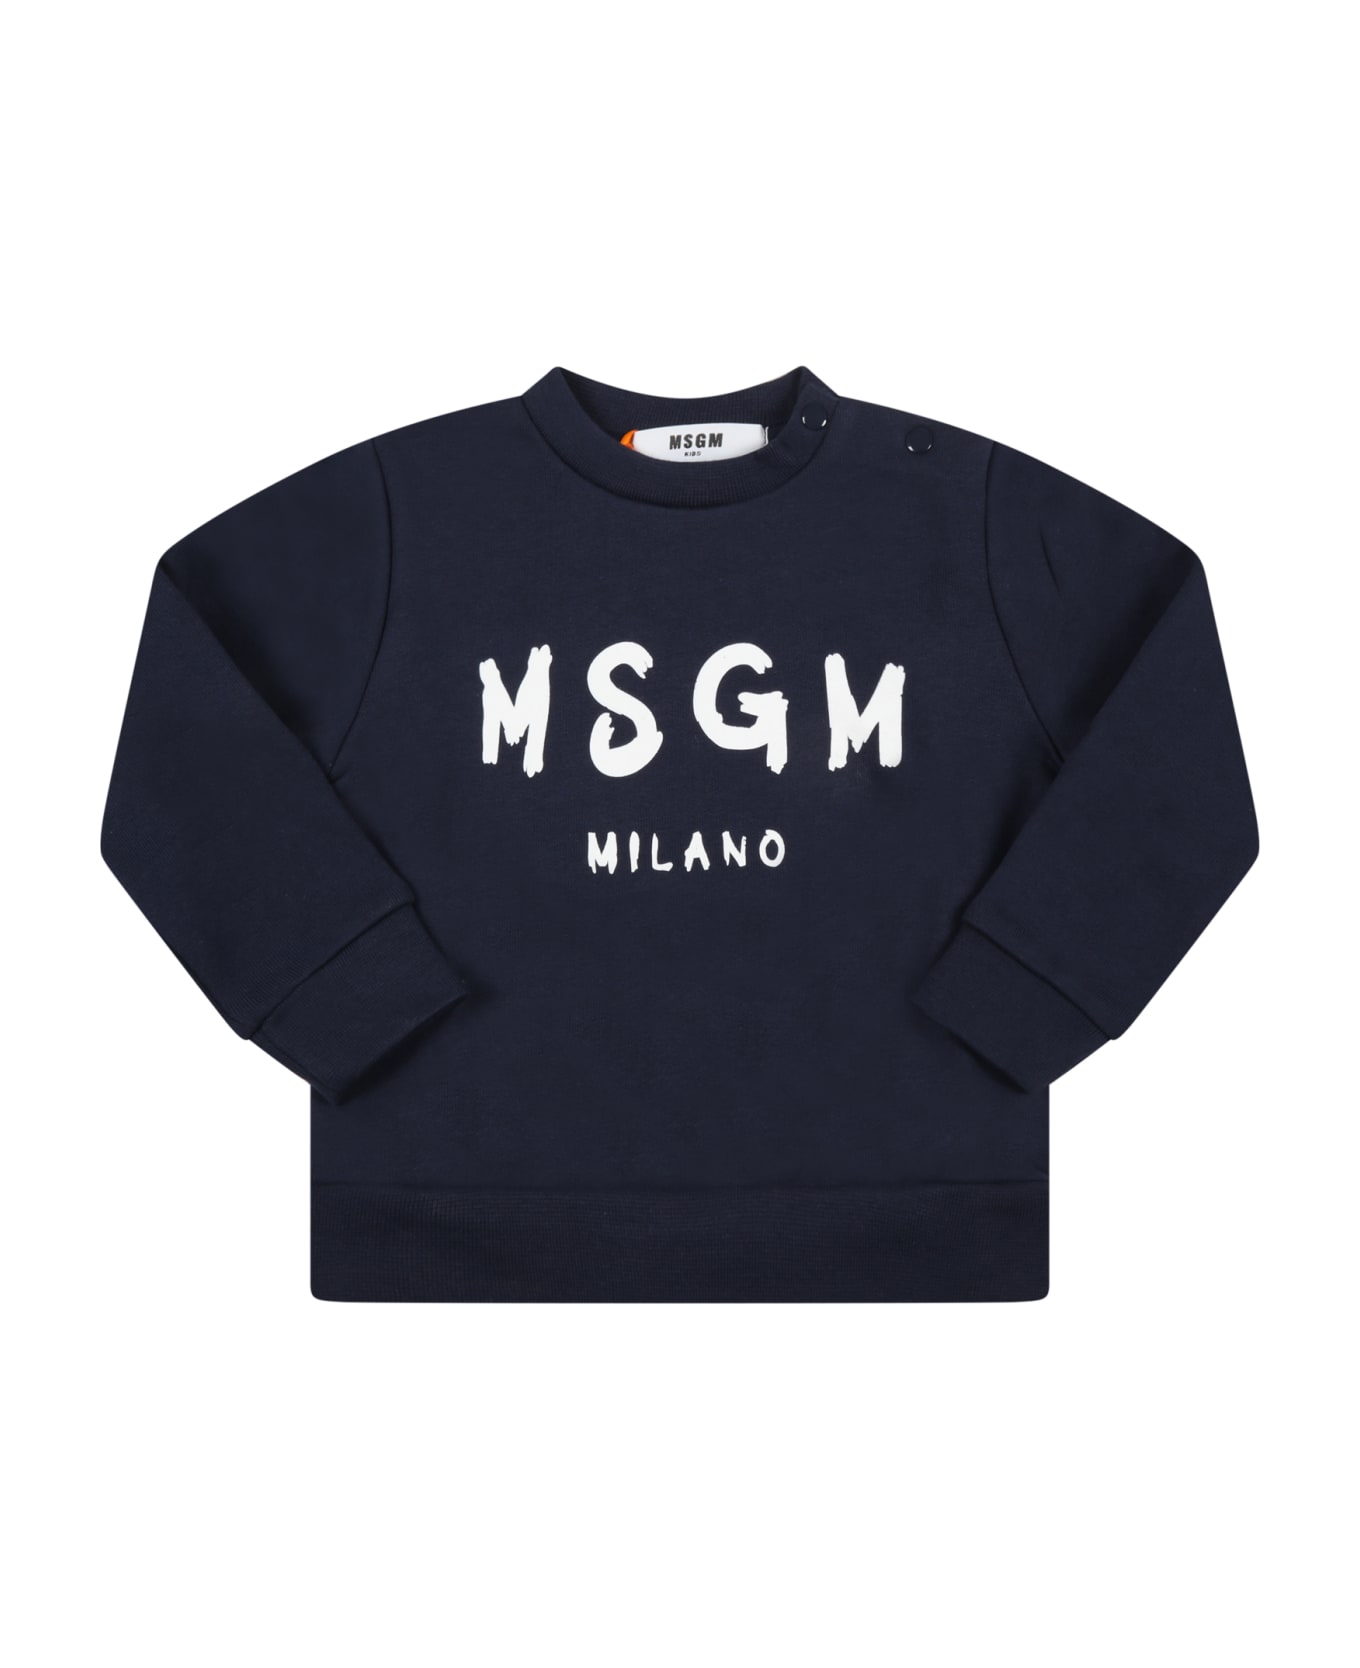 MSGM Blue Sweatshirt For Baby Boy With White Logo - Blue